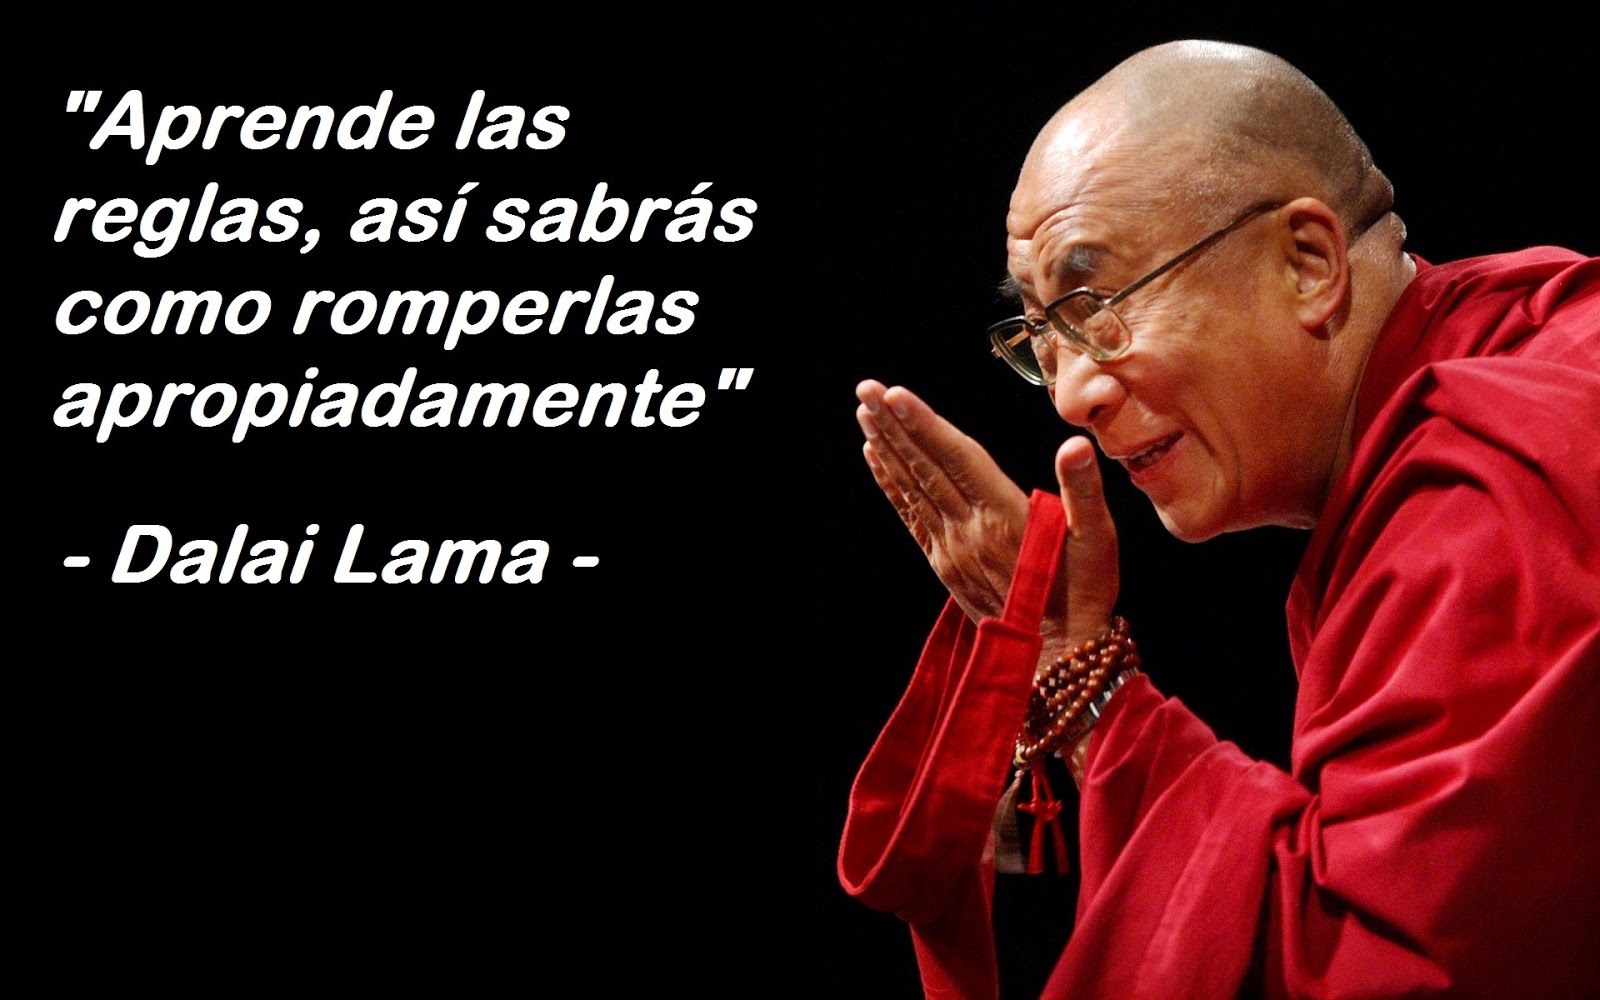 frases-de-exito-por-personajes-famosos-Dalai-Lama